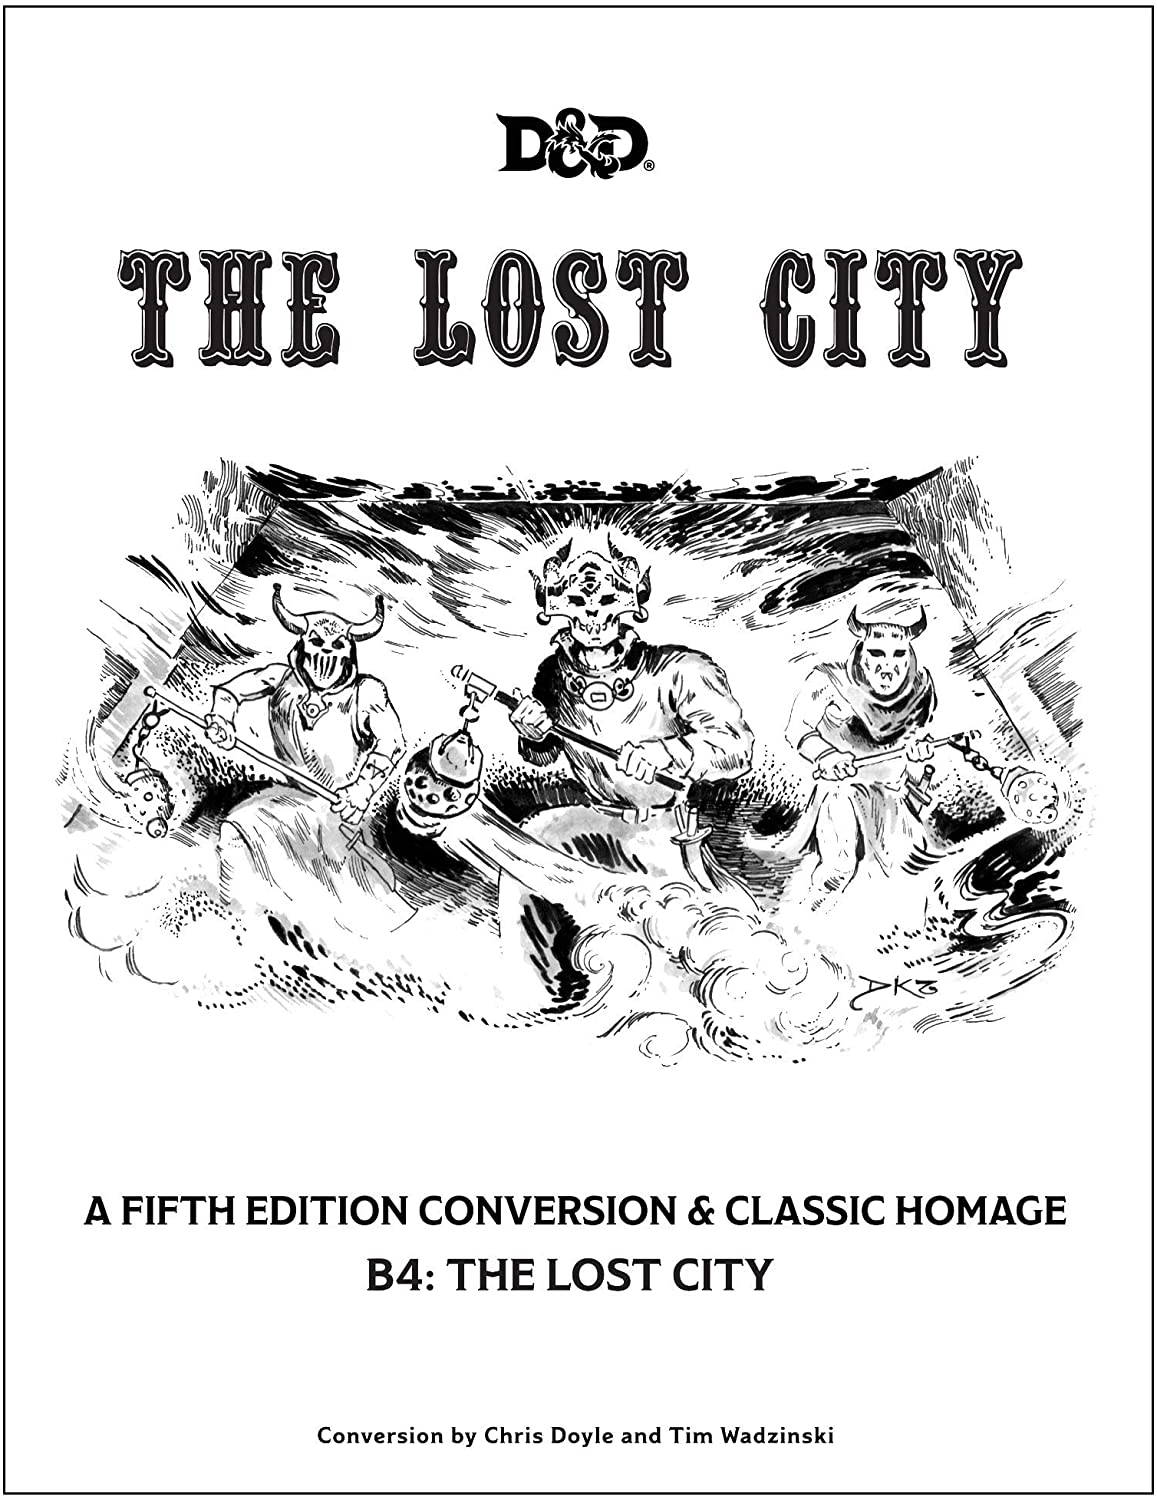 The Lost City: Original Adventures Reincarnated #4.